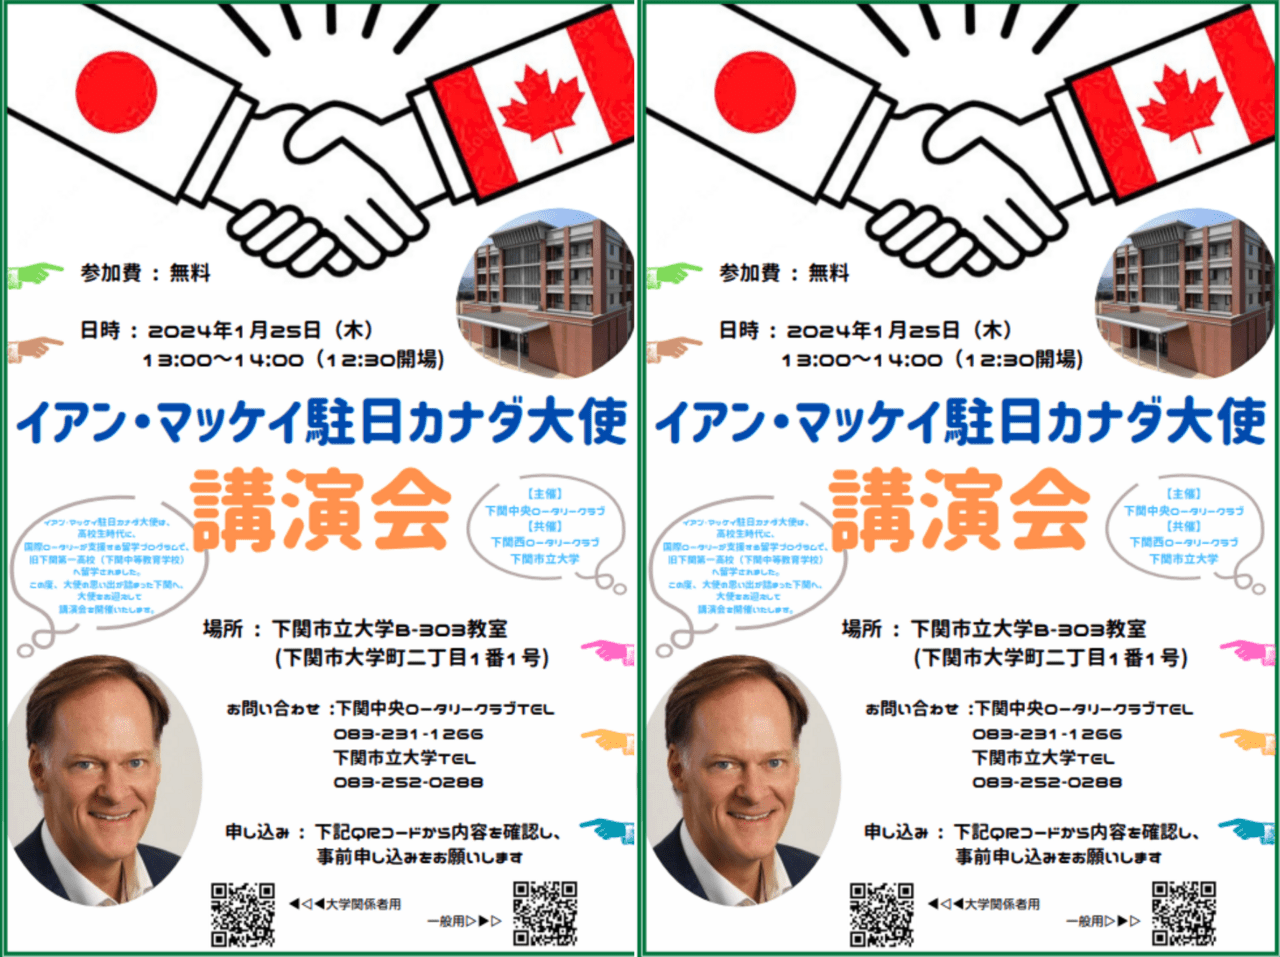 Canadian ambassador will Visit Japan